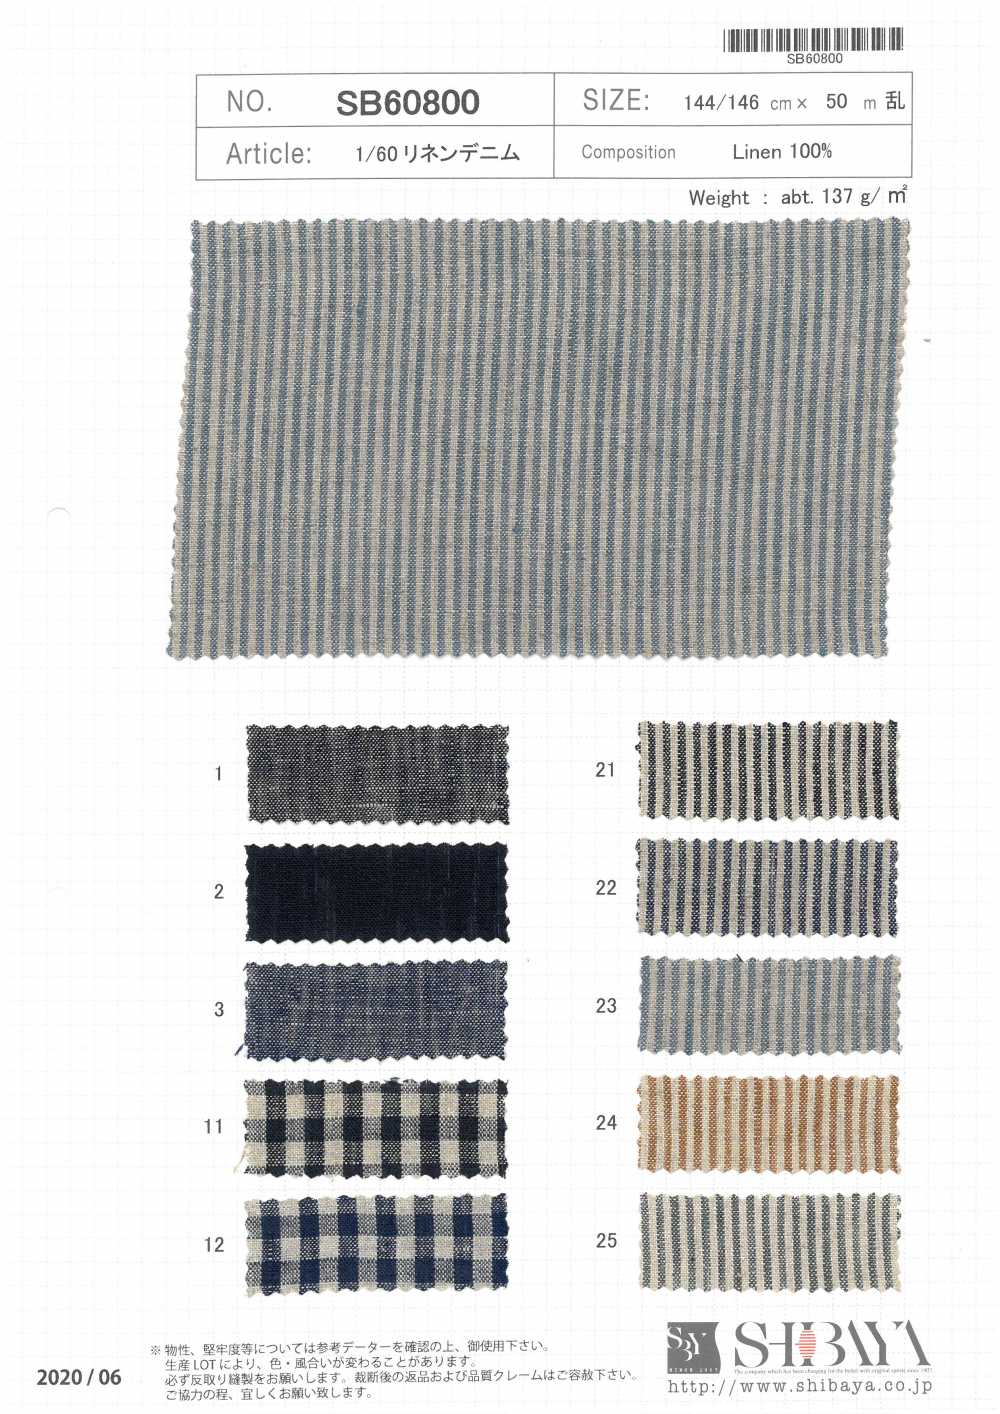 SB60800 1/60 Leinen-Denim[Textilgewebe] SHIBAYA